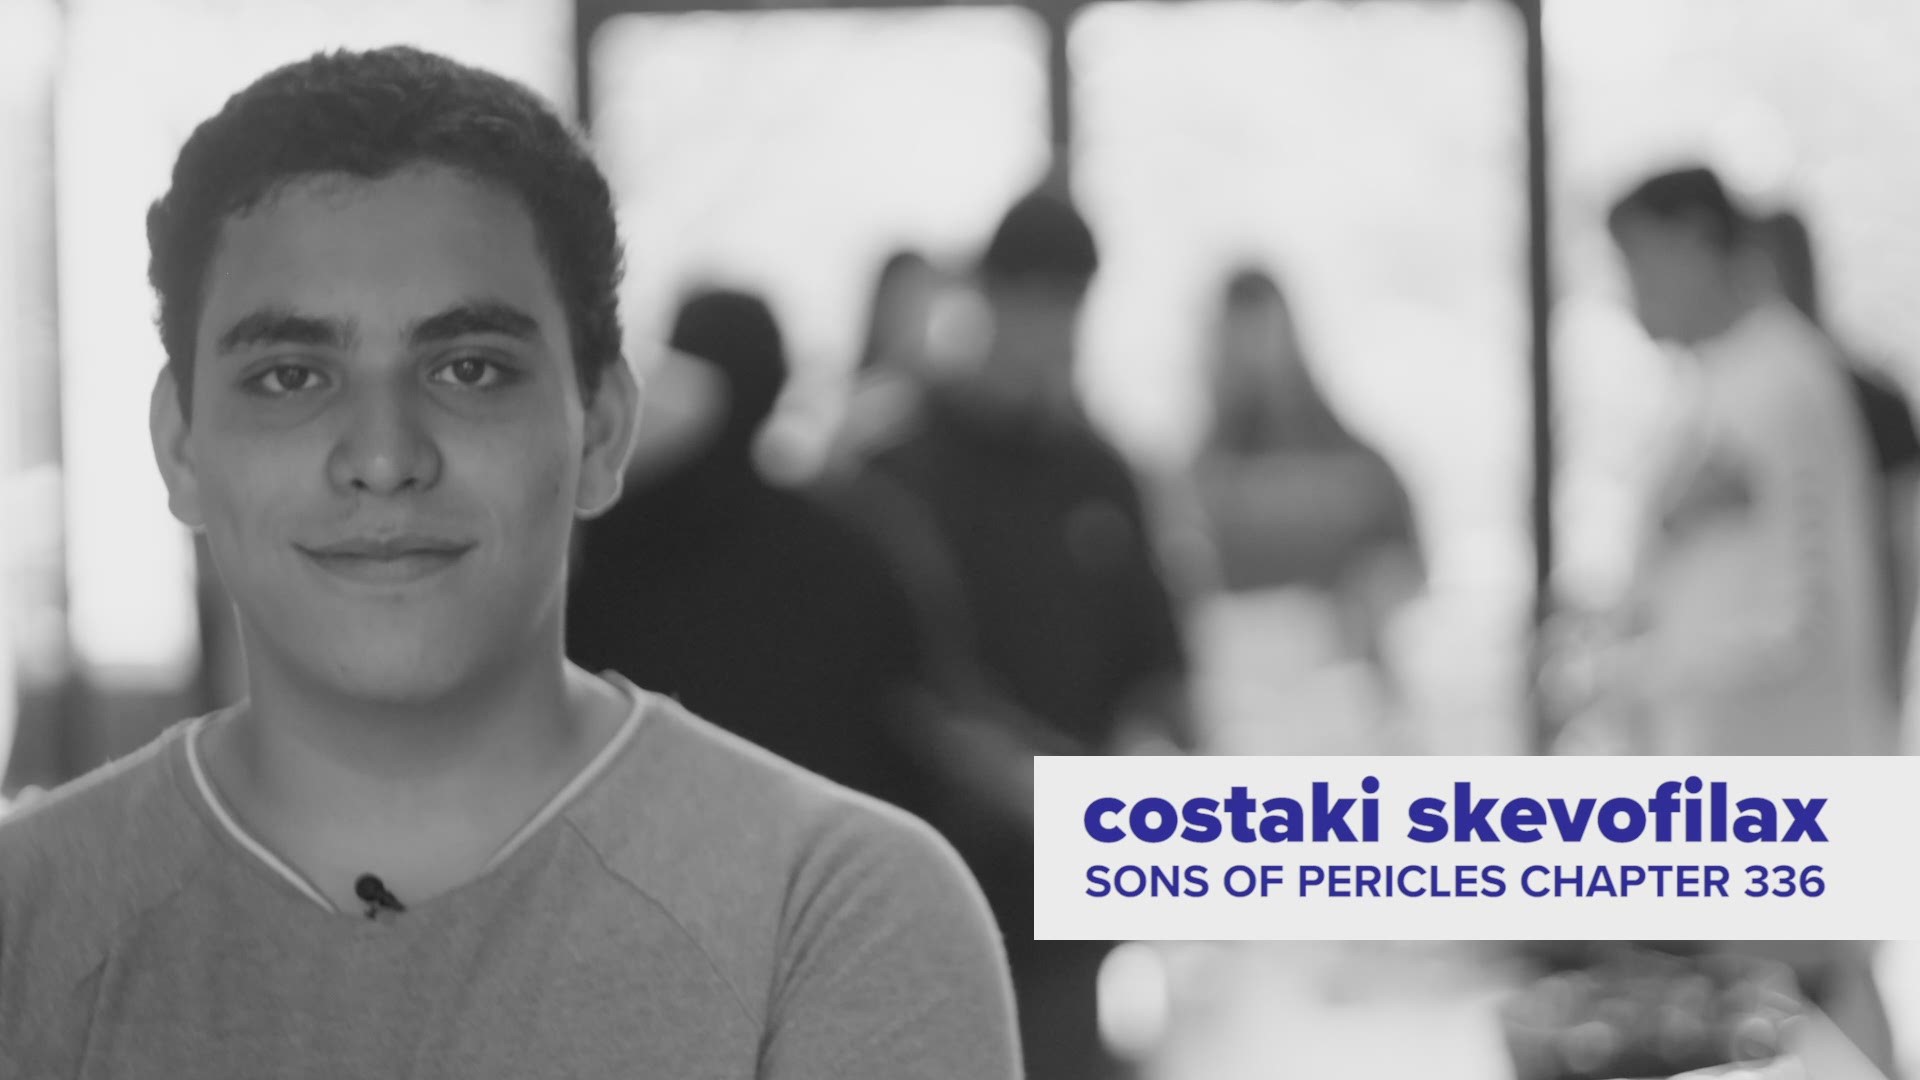 Meet Five Who Care winner Costaki Skevofilax.